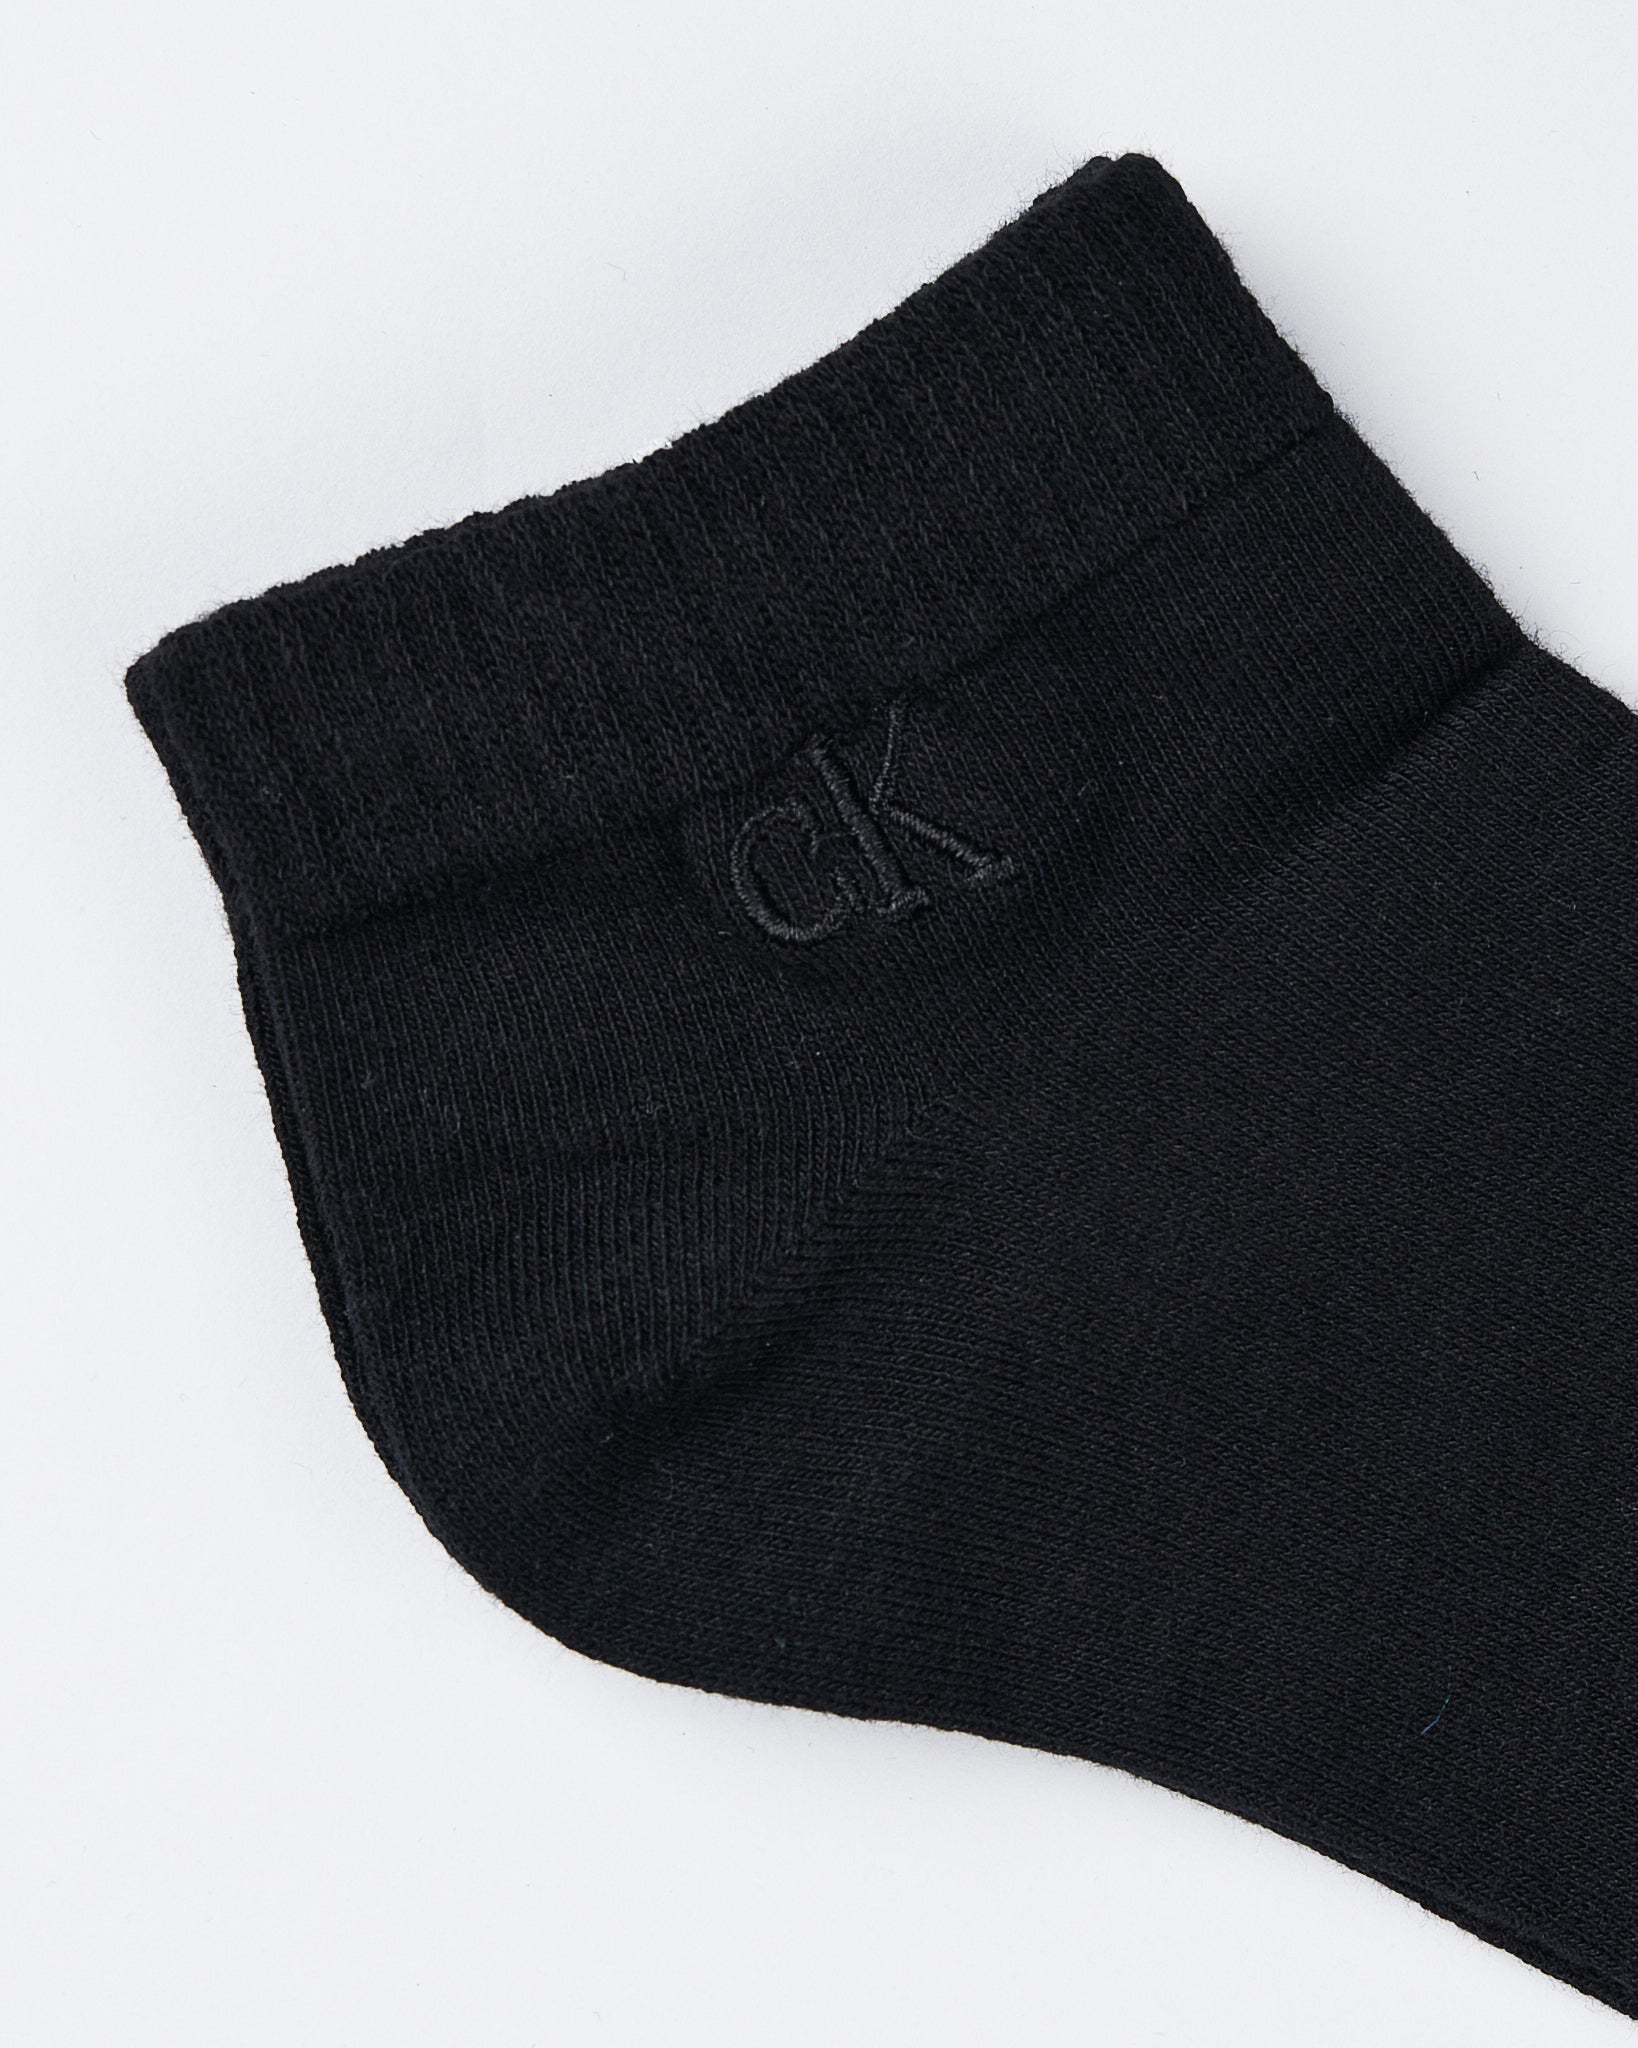 CK Black Low Cut 1 Pairs Socks 2.10